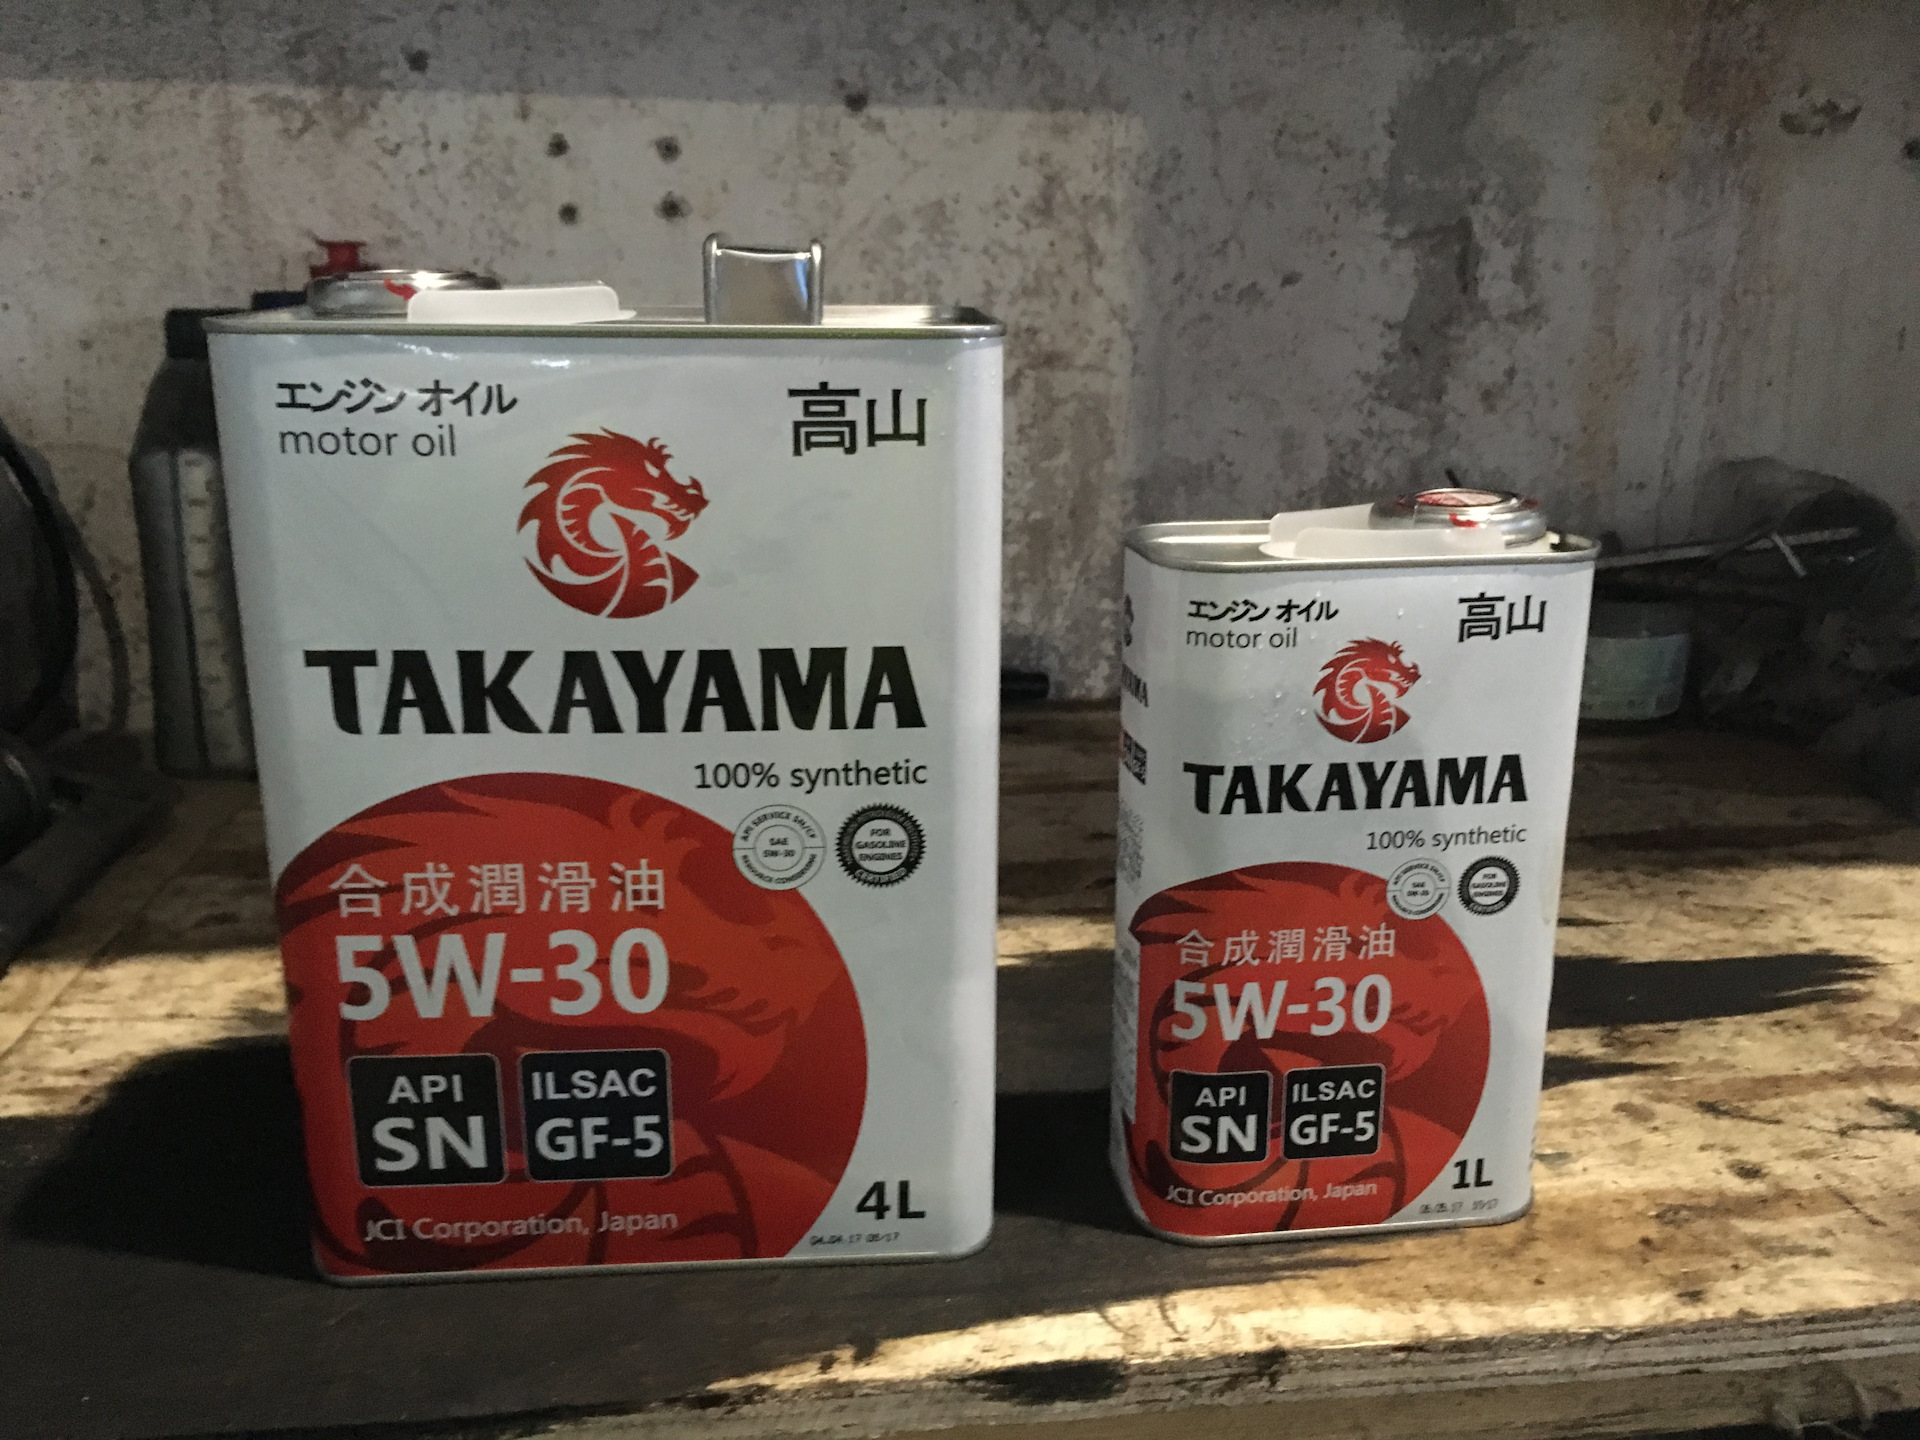 Токояма масло 5w30. Такаяма 5w30. Масло моторное Takayama 5w30. Японское моторное масло Takayama 5w30. Takayama 5w30 SN gf-5.